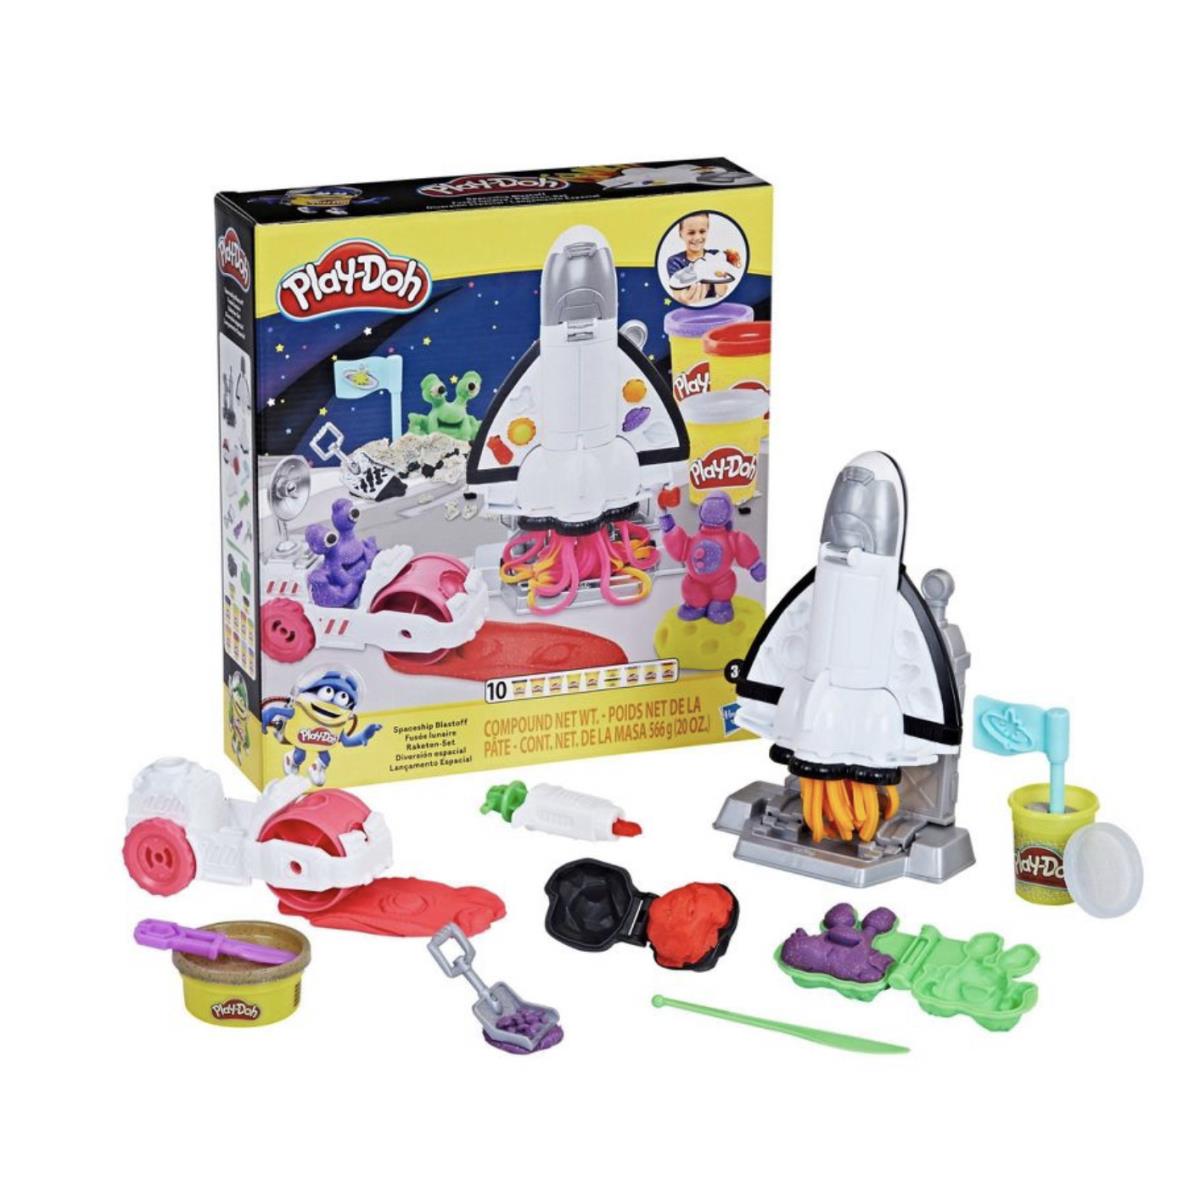 Play-doh Spaceship Blastoff Playset Toy